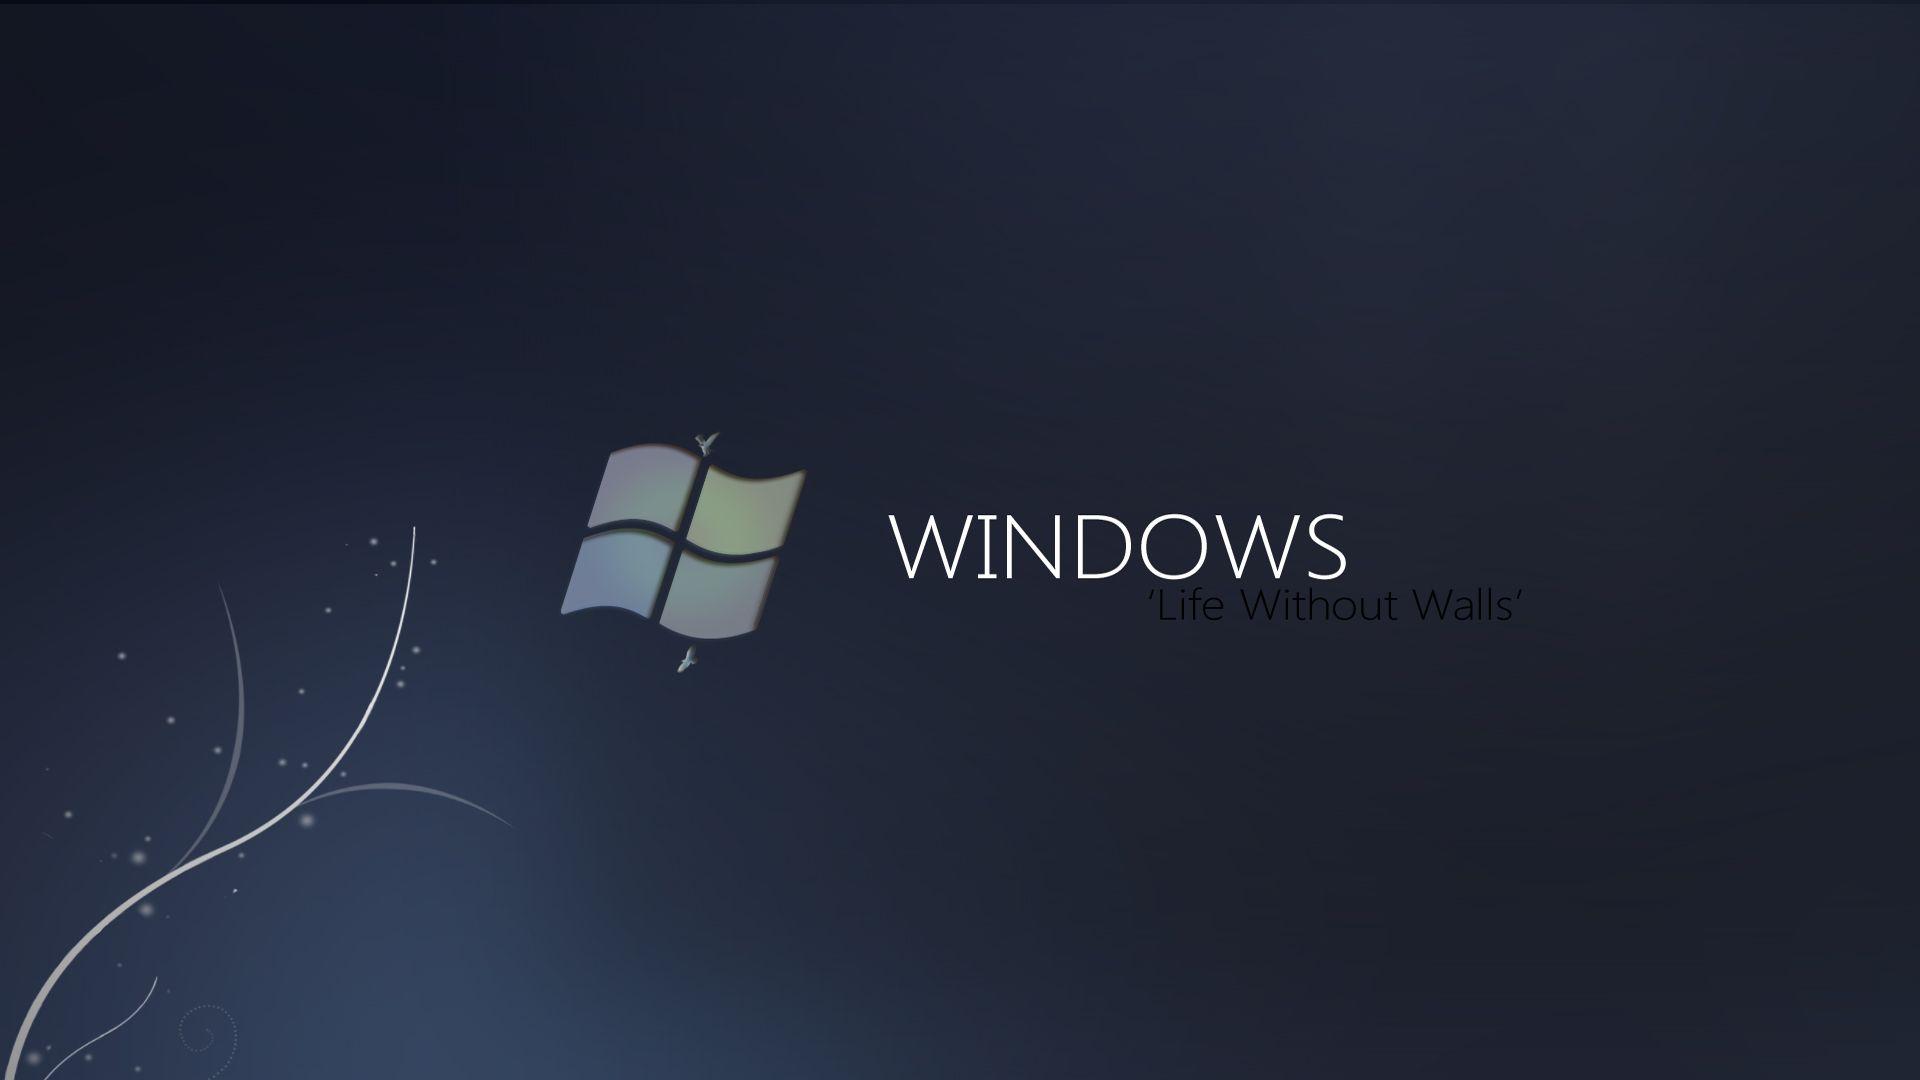 download iso windows server 2012 r2 standard